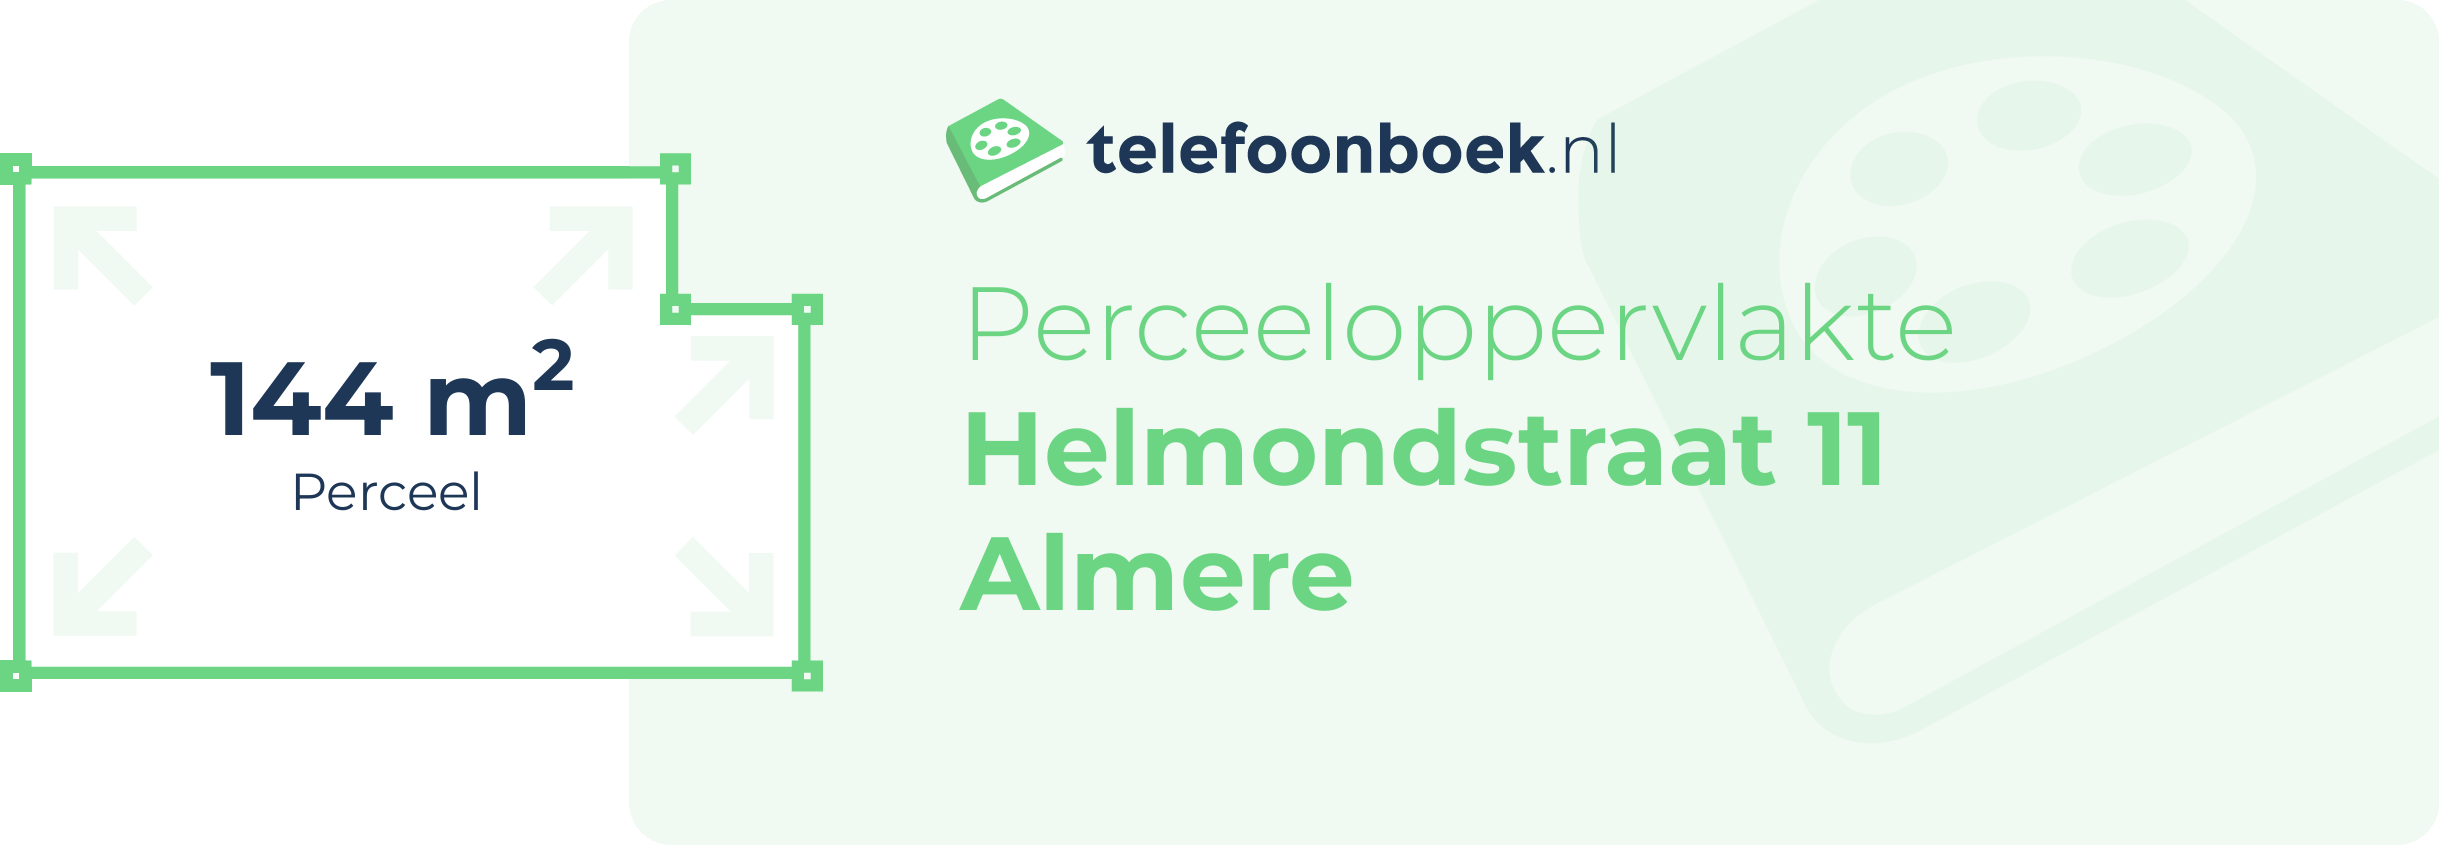 Perceeloppervlakte Helmondstraat 11 Almere